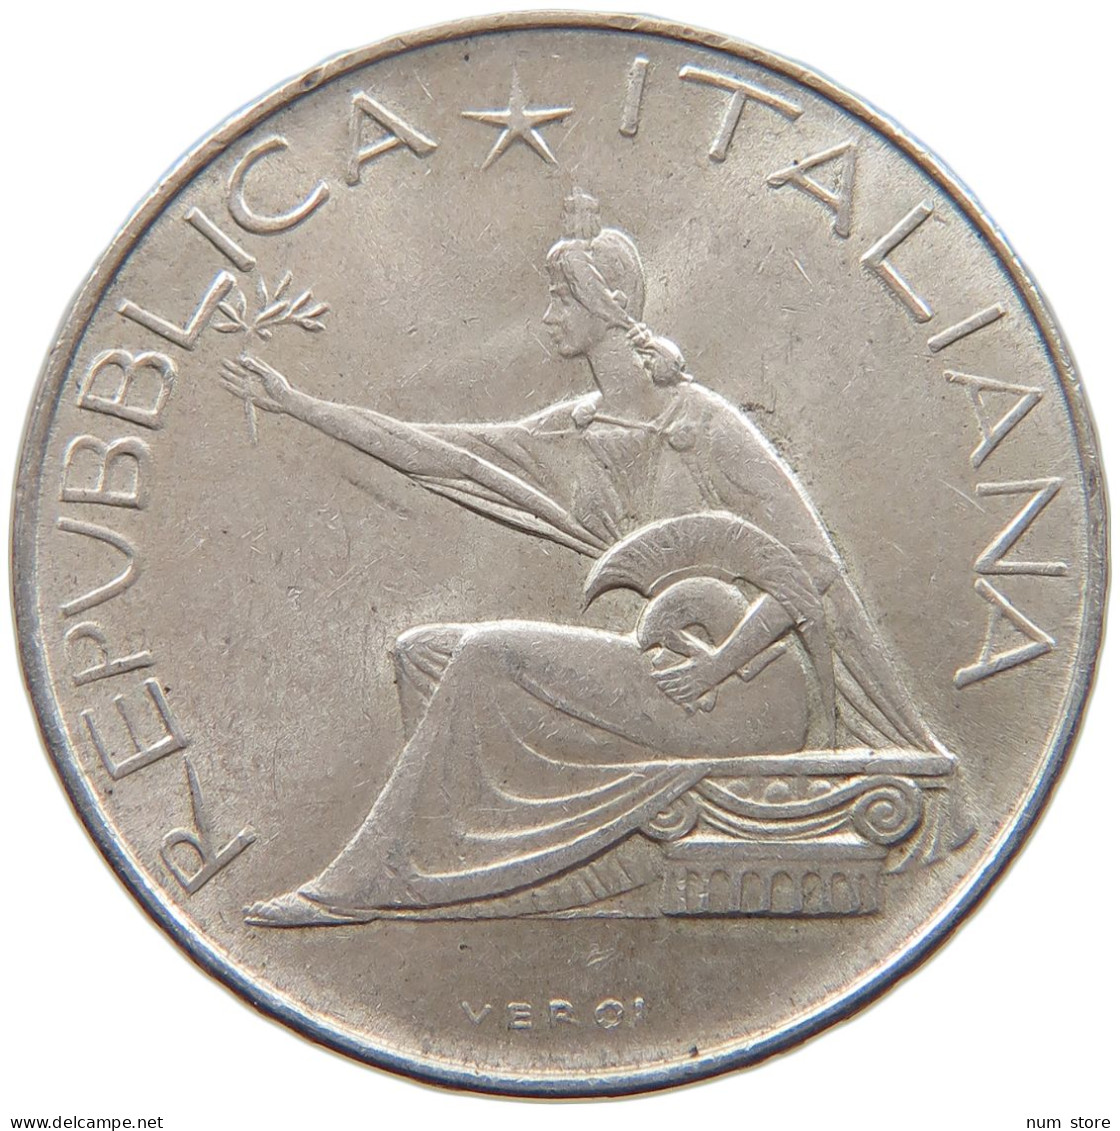 ITALY 500 LIRE 1961  #c016 0247 - 500 Liras